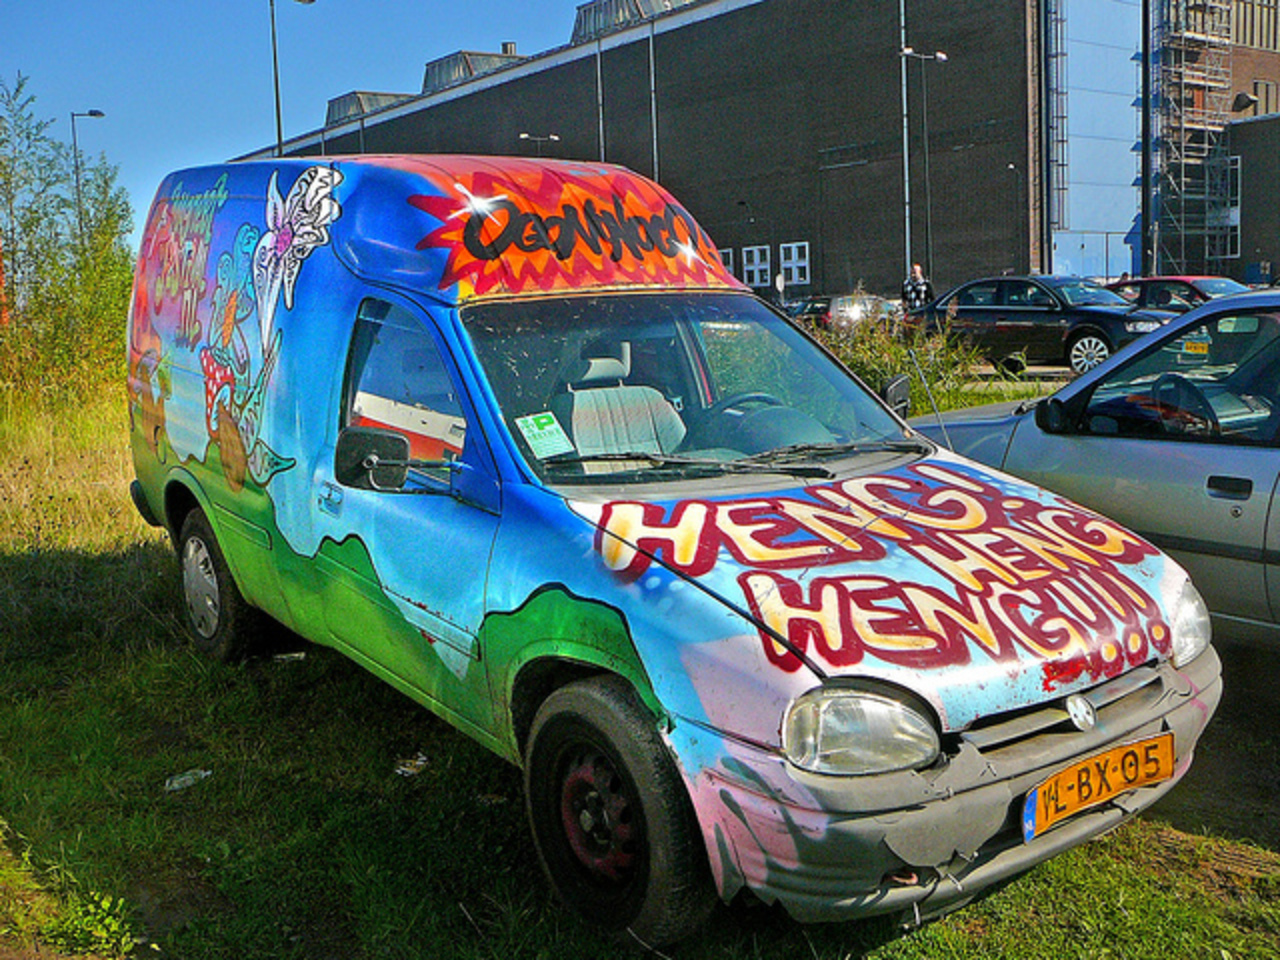 Opel Combo, 1996, Amsterdam, NDSM-werf, 10-2010 2 | Flickr - Photo ...